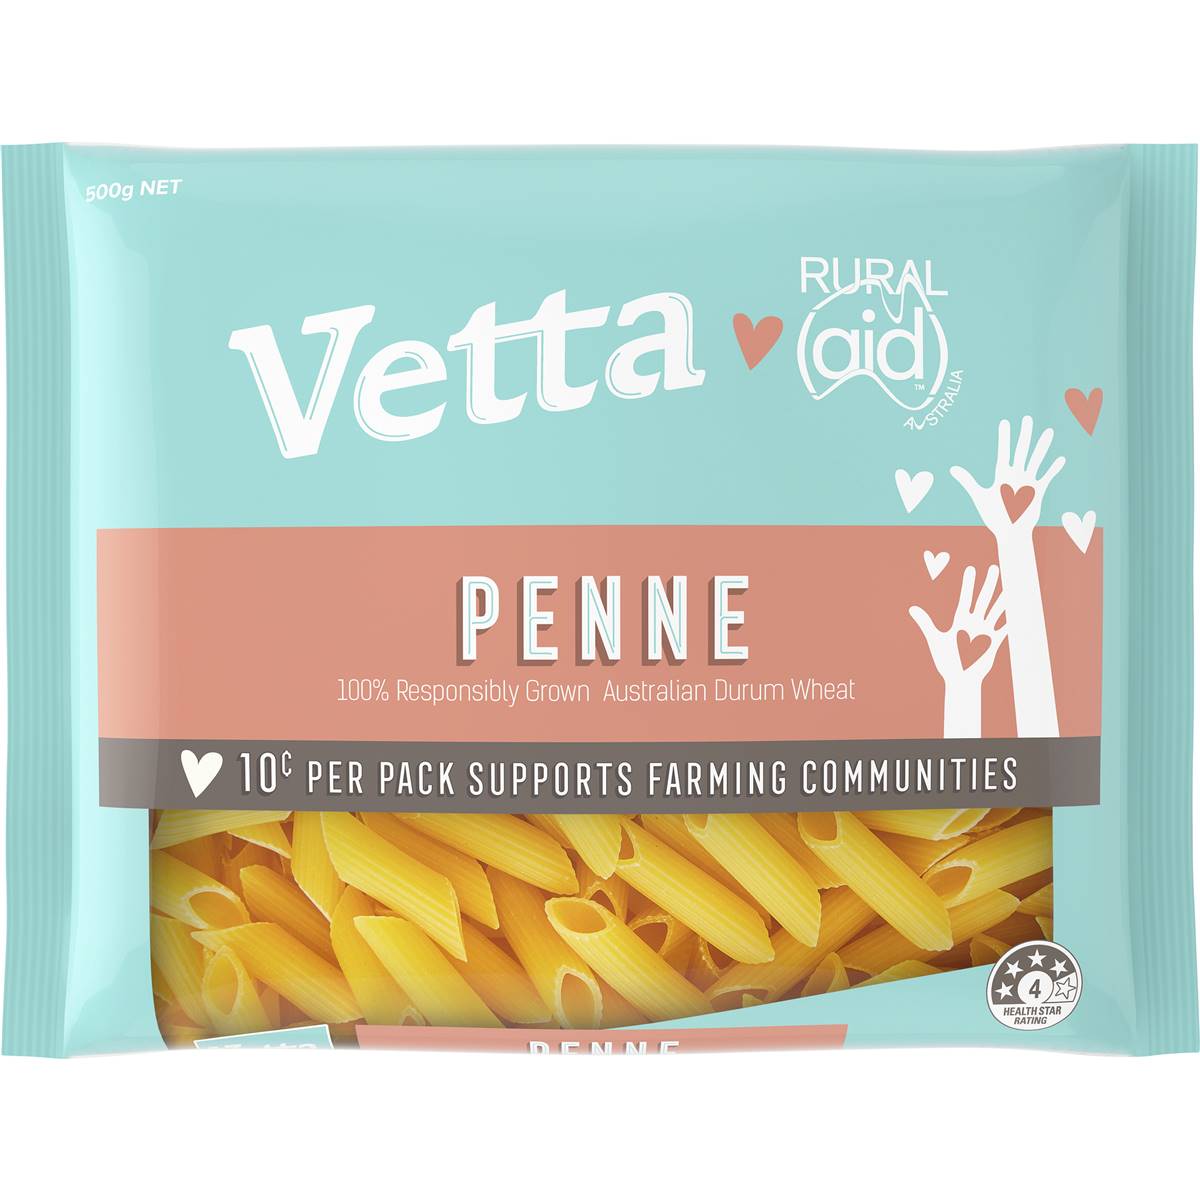 Calories in Vetta Rural Aid Penne Pasta